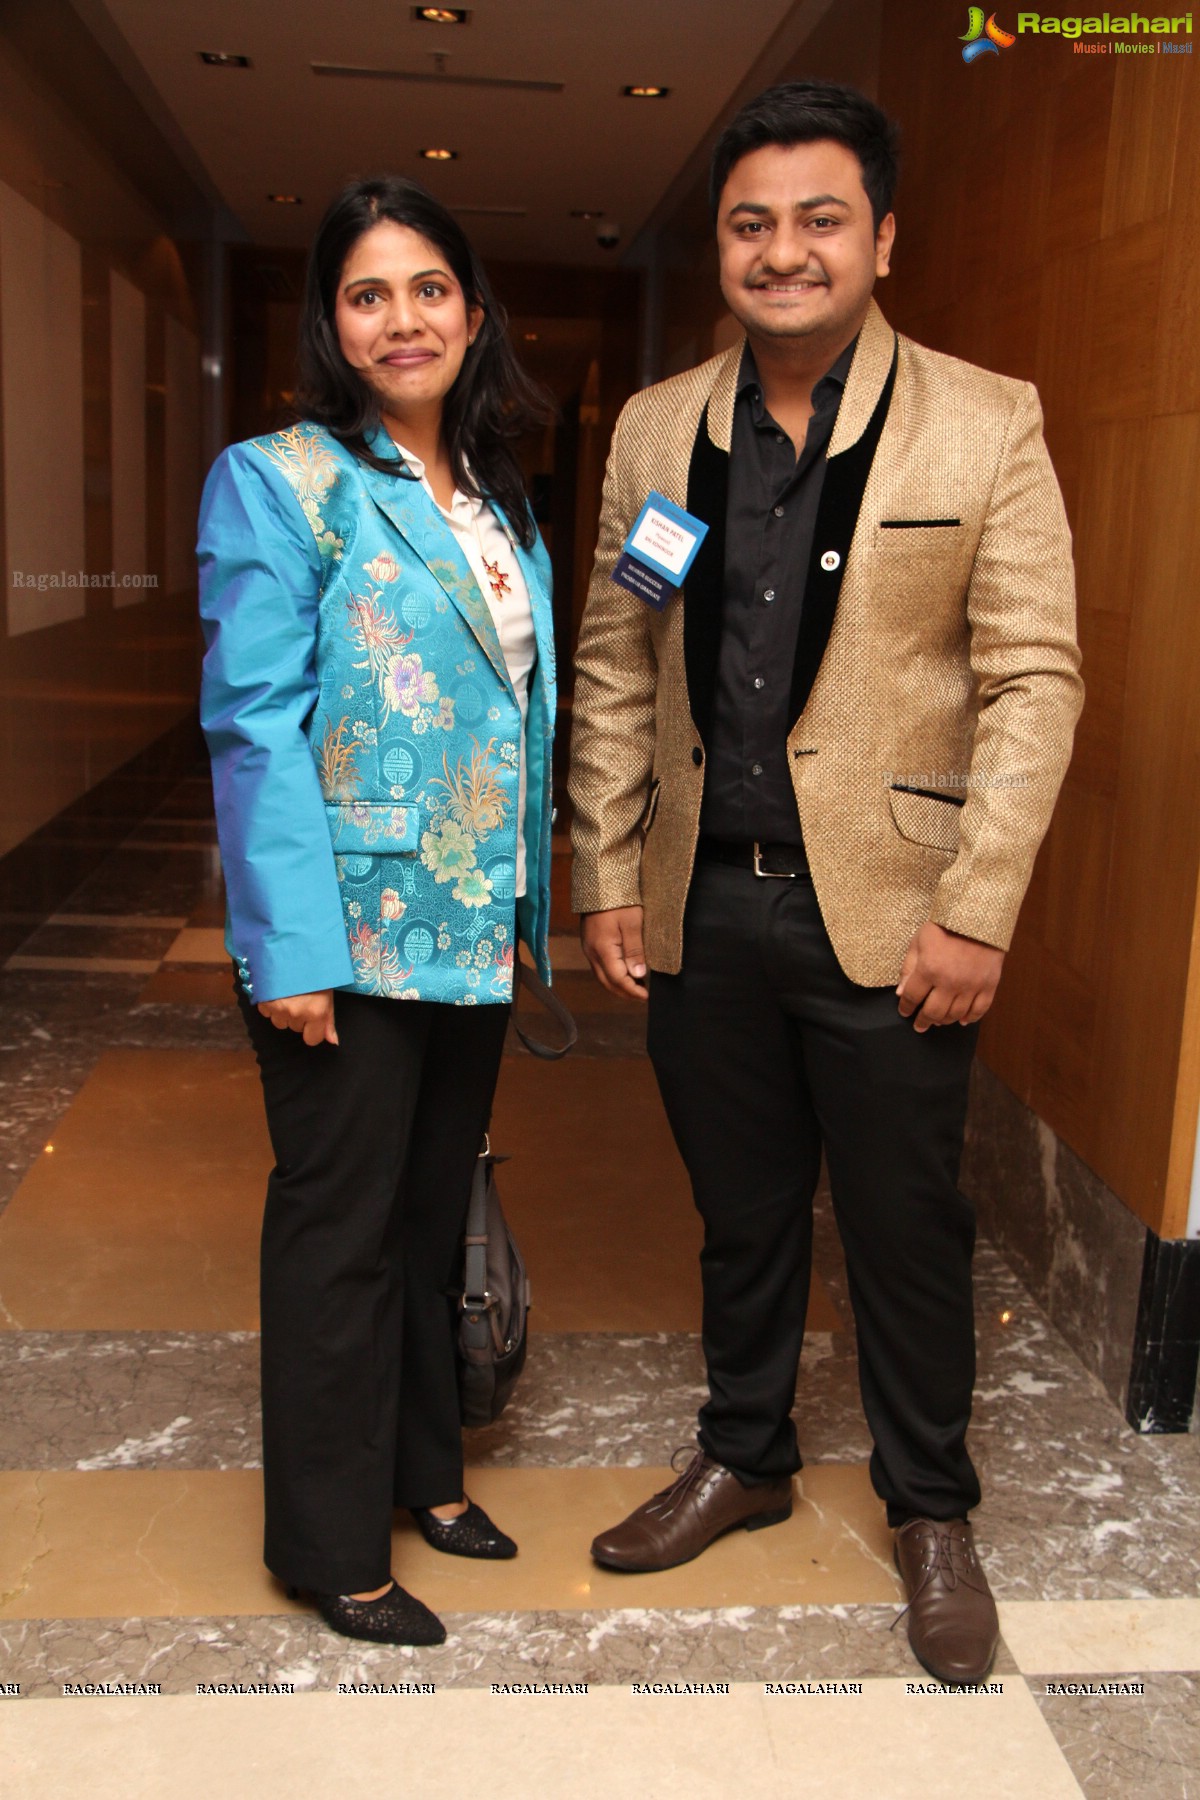 BNI Kohinoor Meet at Radission Blu Plaza, Hyderabad (July 23, 2014)